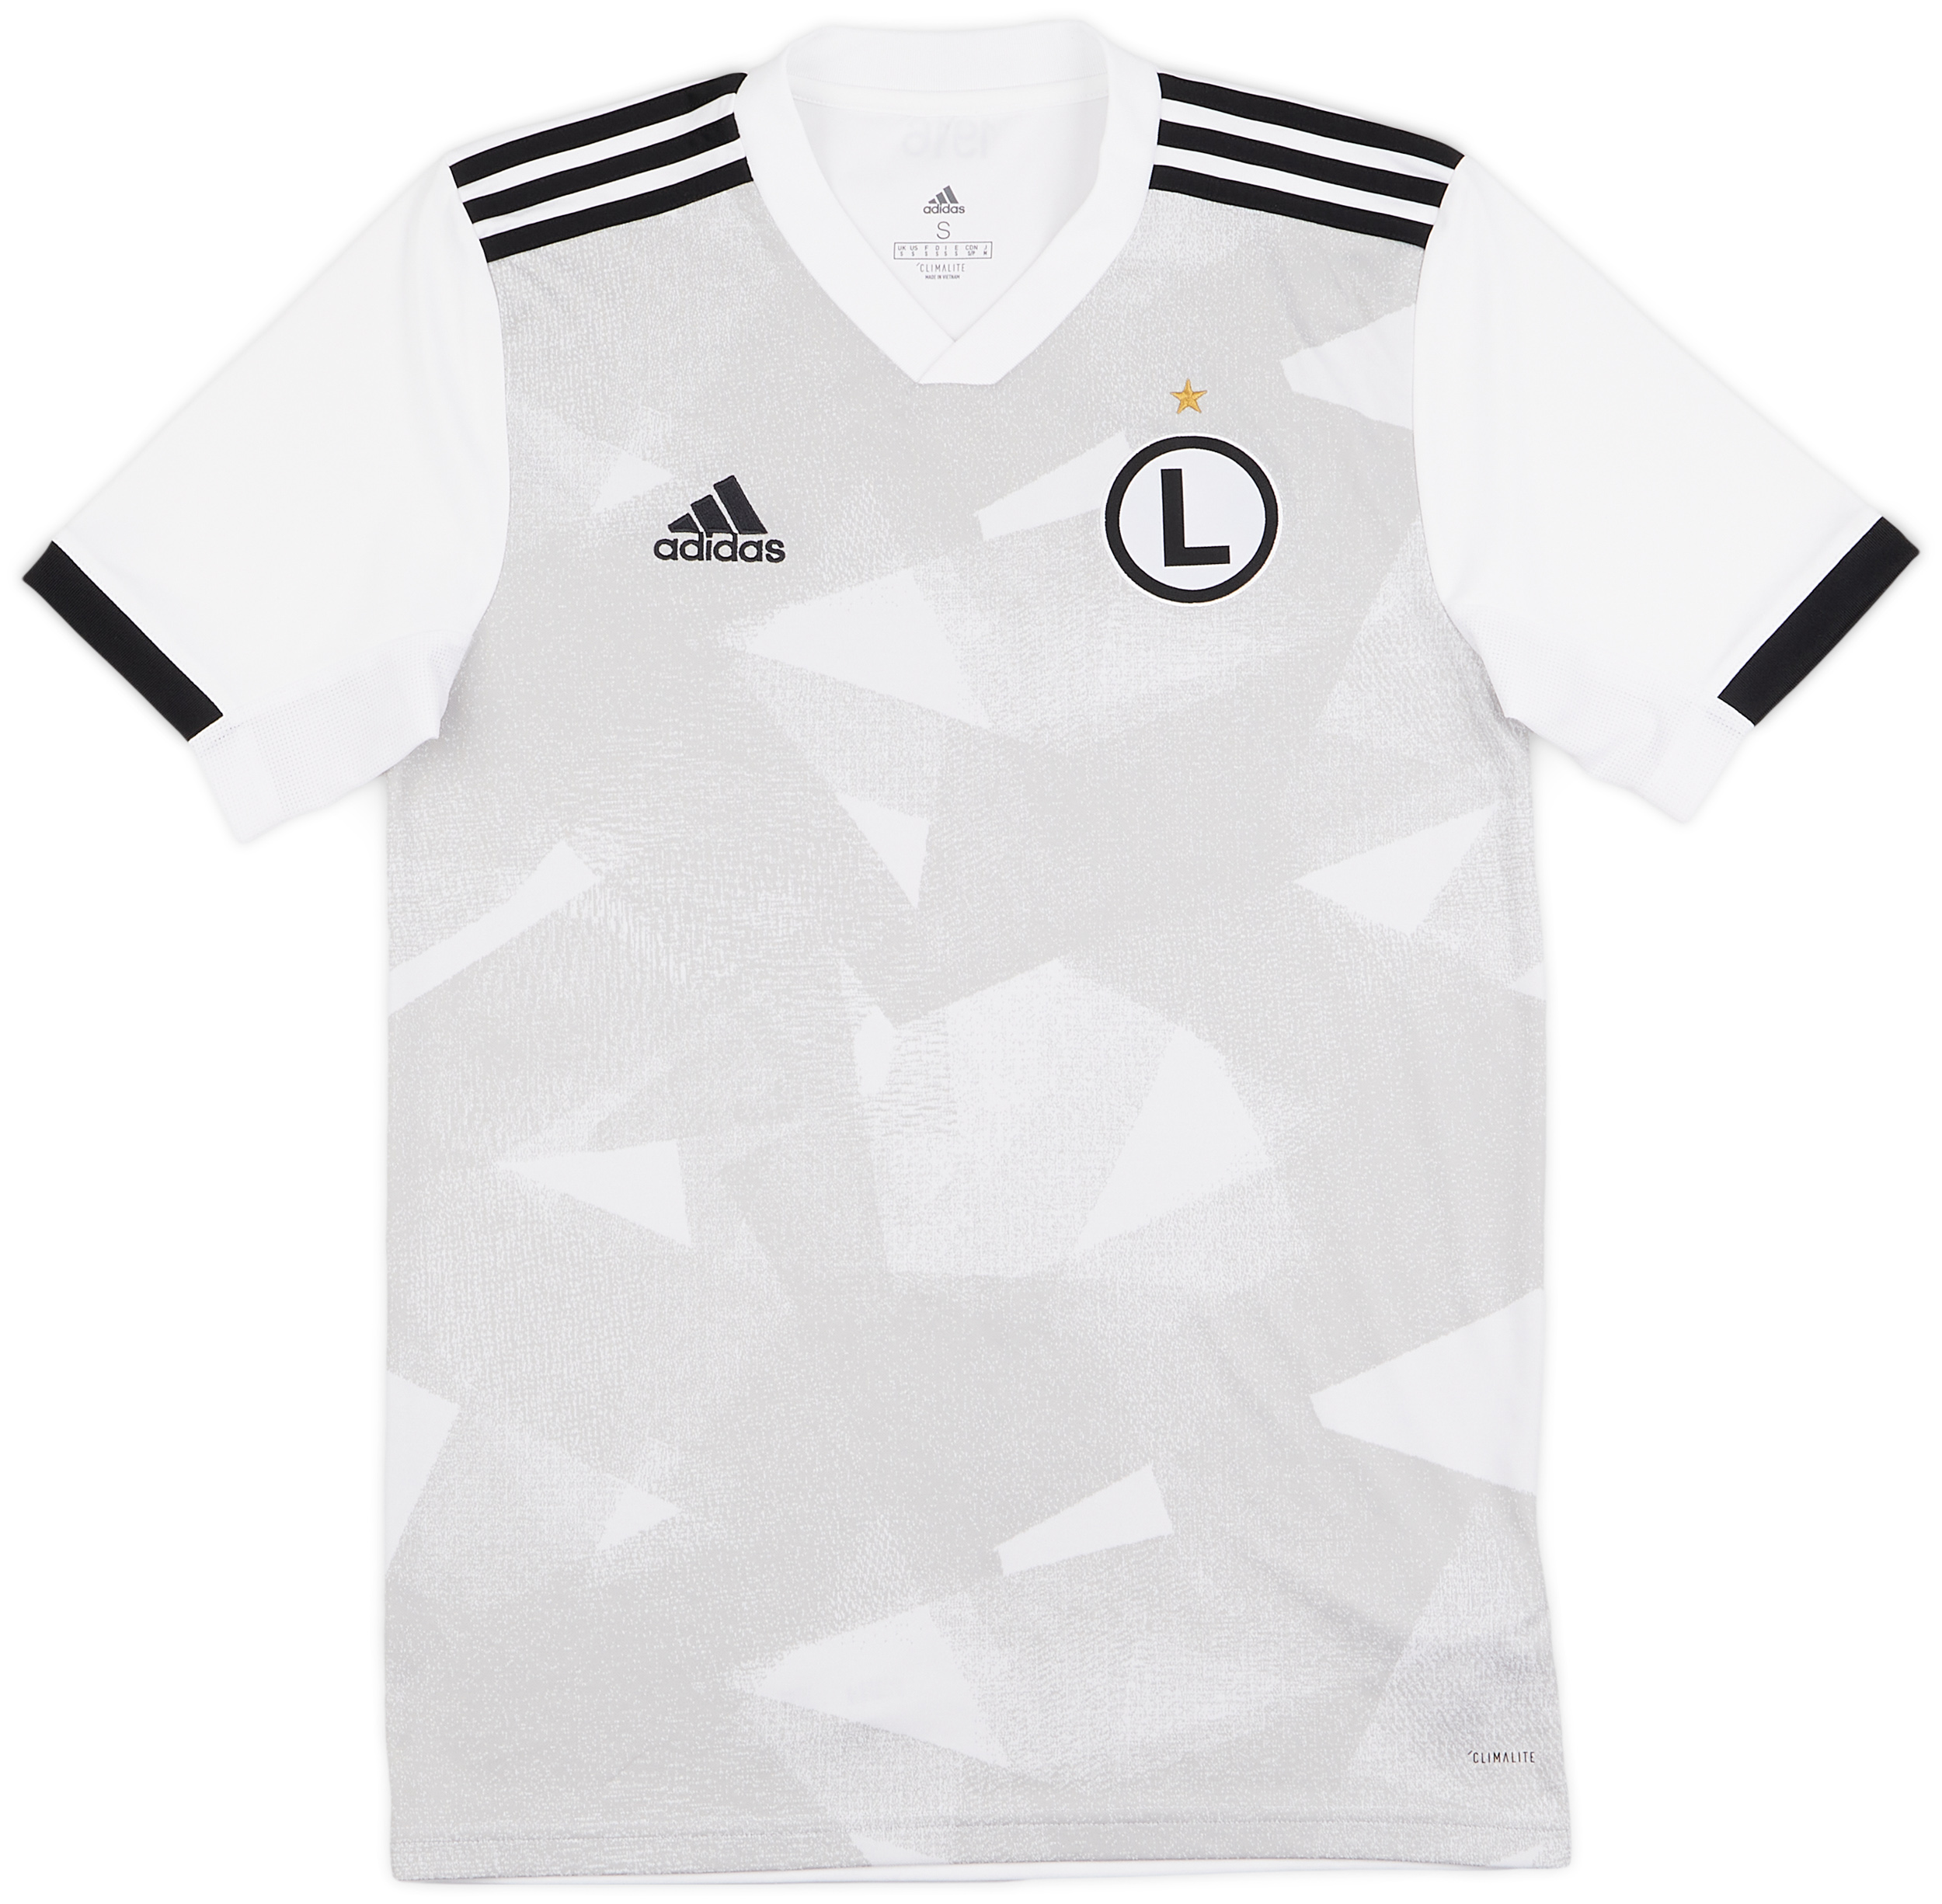 Legia Warsaw   Uit  shirt  (Original)